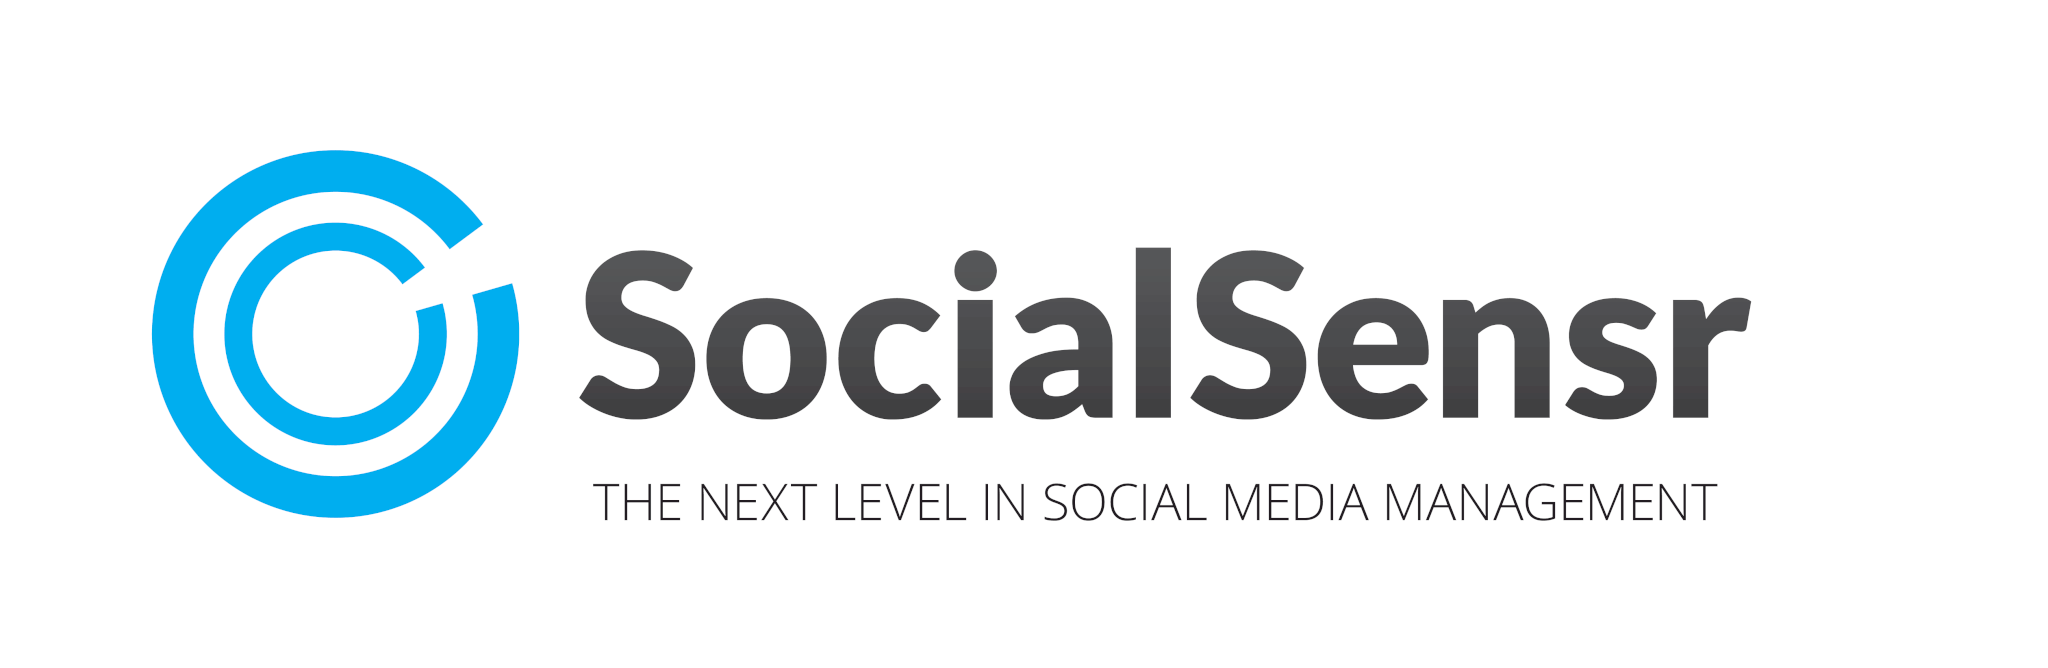 Logo van SocialSensr met de tekst “the next level in social media management”